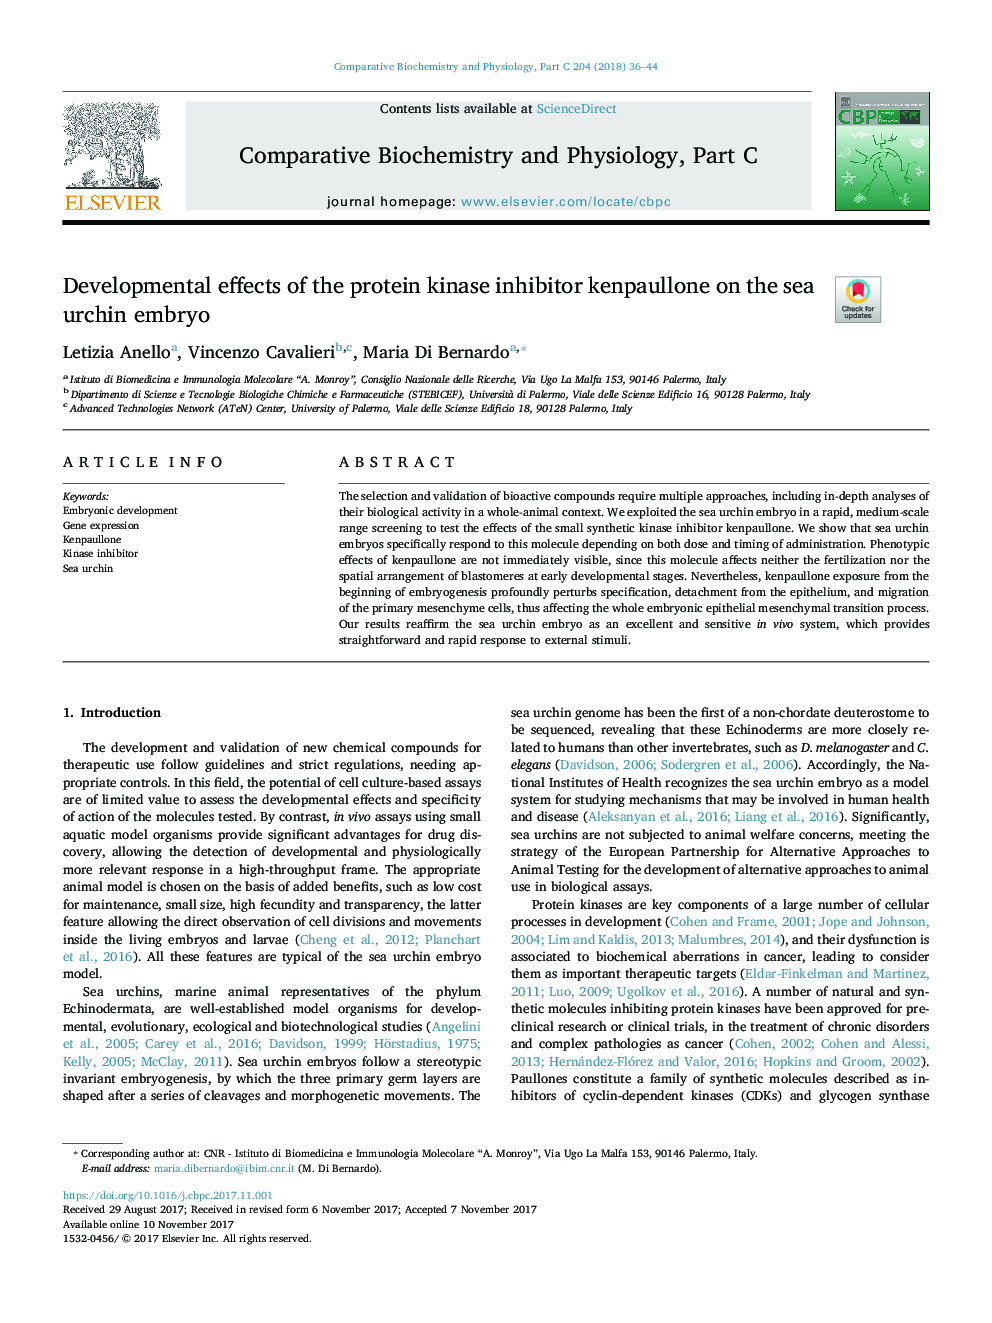 Developmental effects of the protein kinase inhibitor kenpaullone on the sea urchin embryo